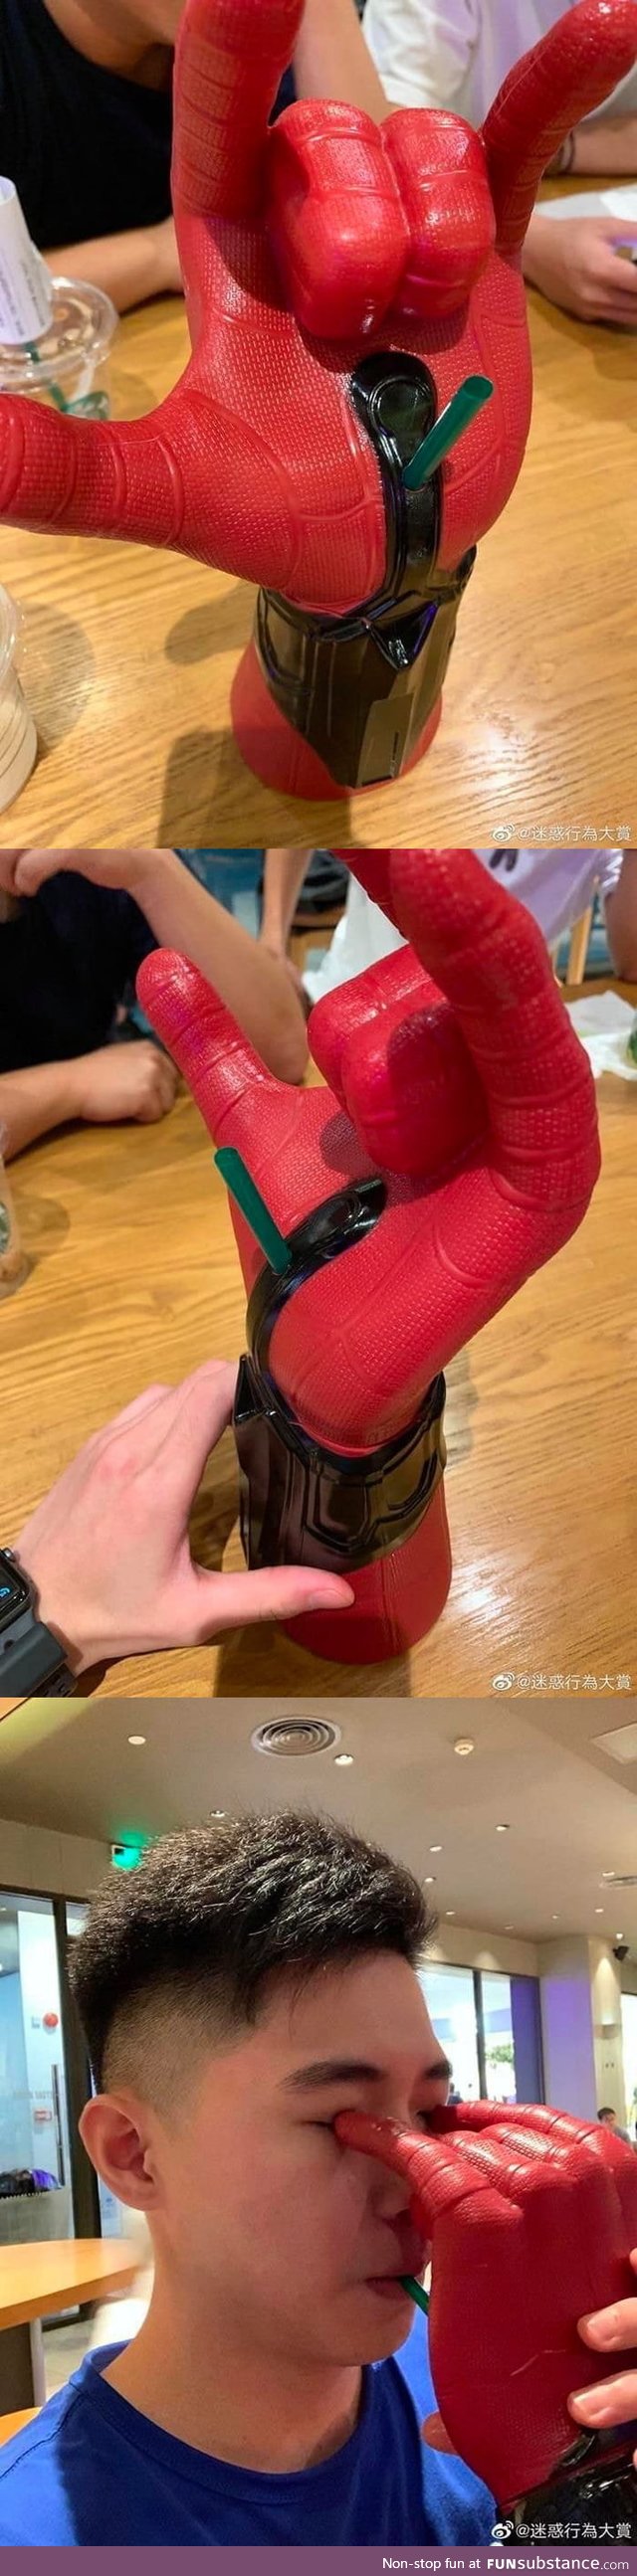 Nice Spiderman cup